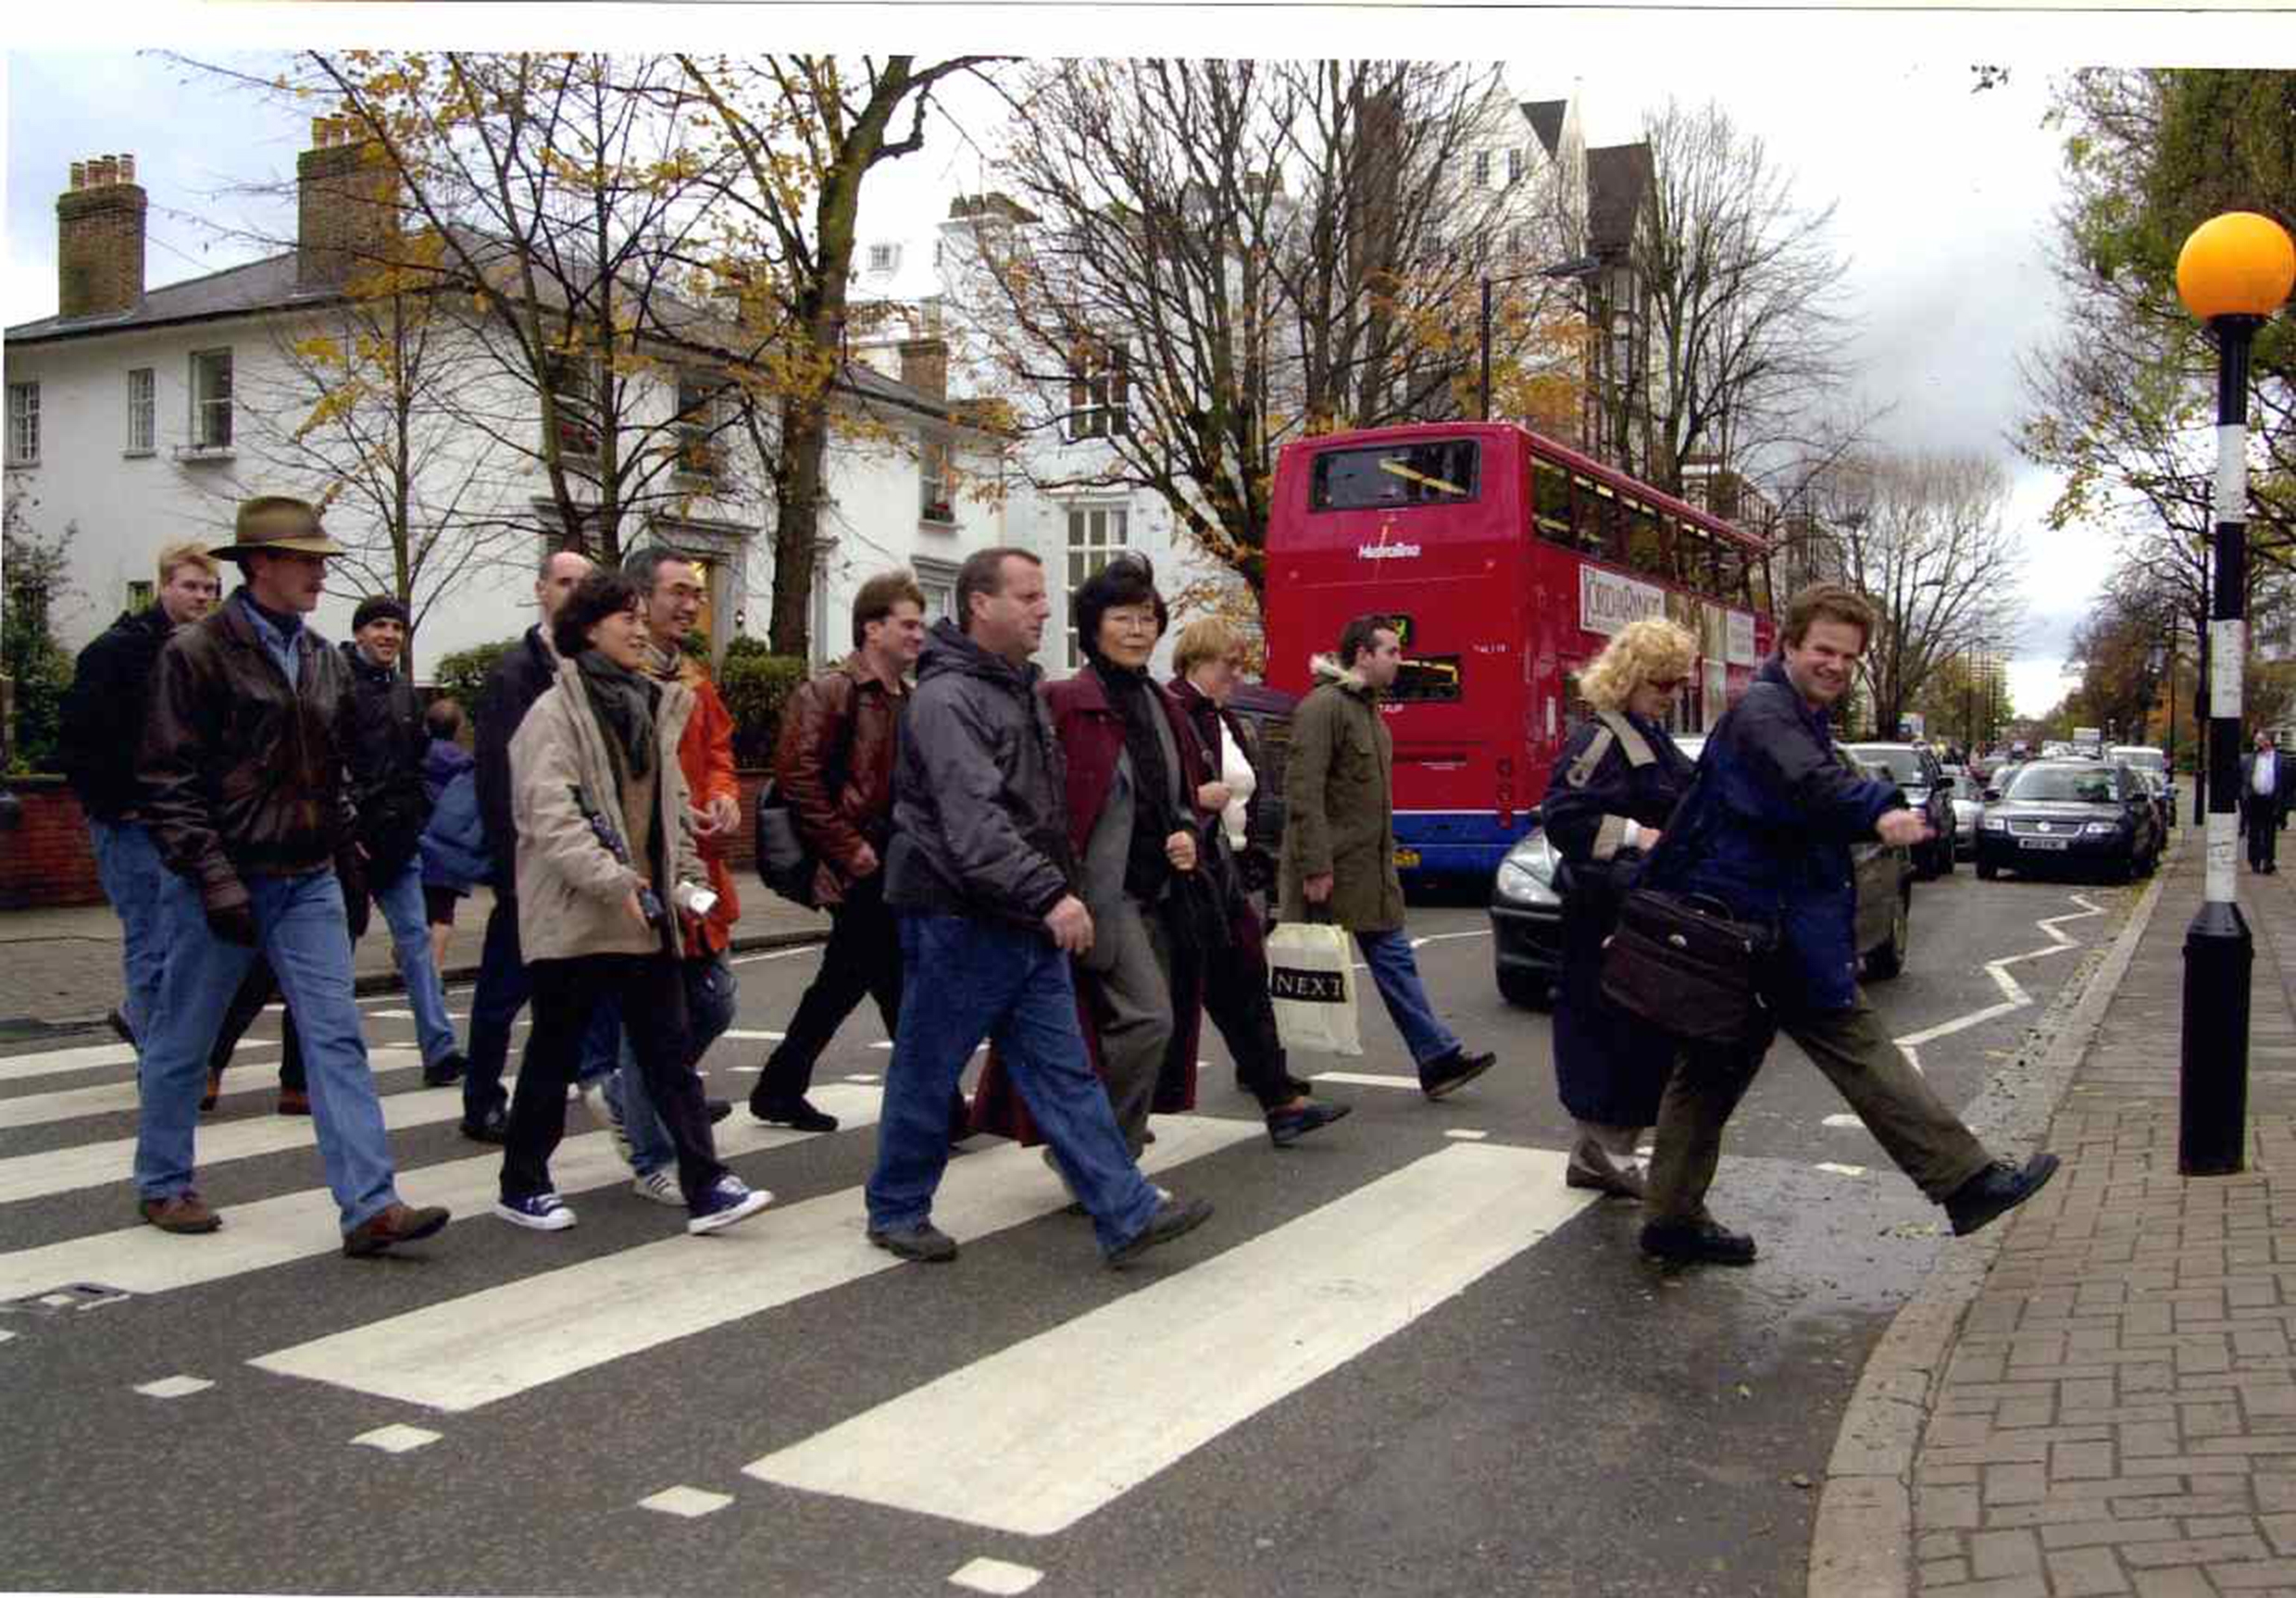 Beatles London walks and Beatles London tours